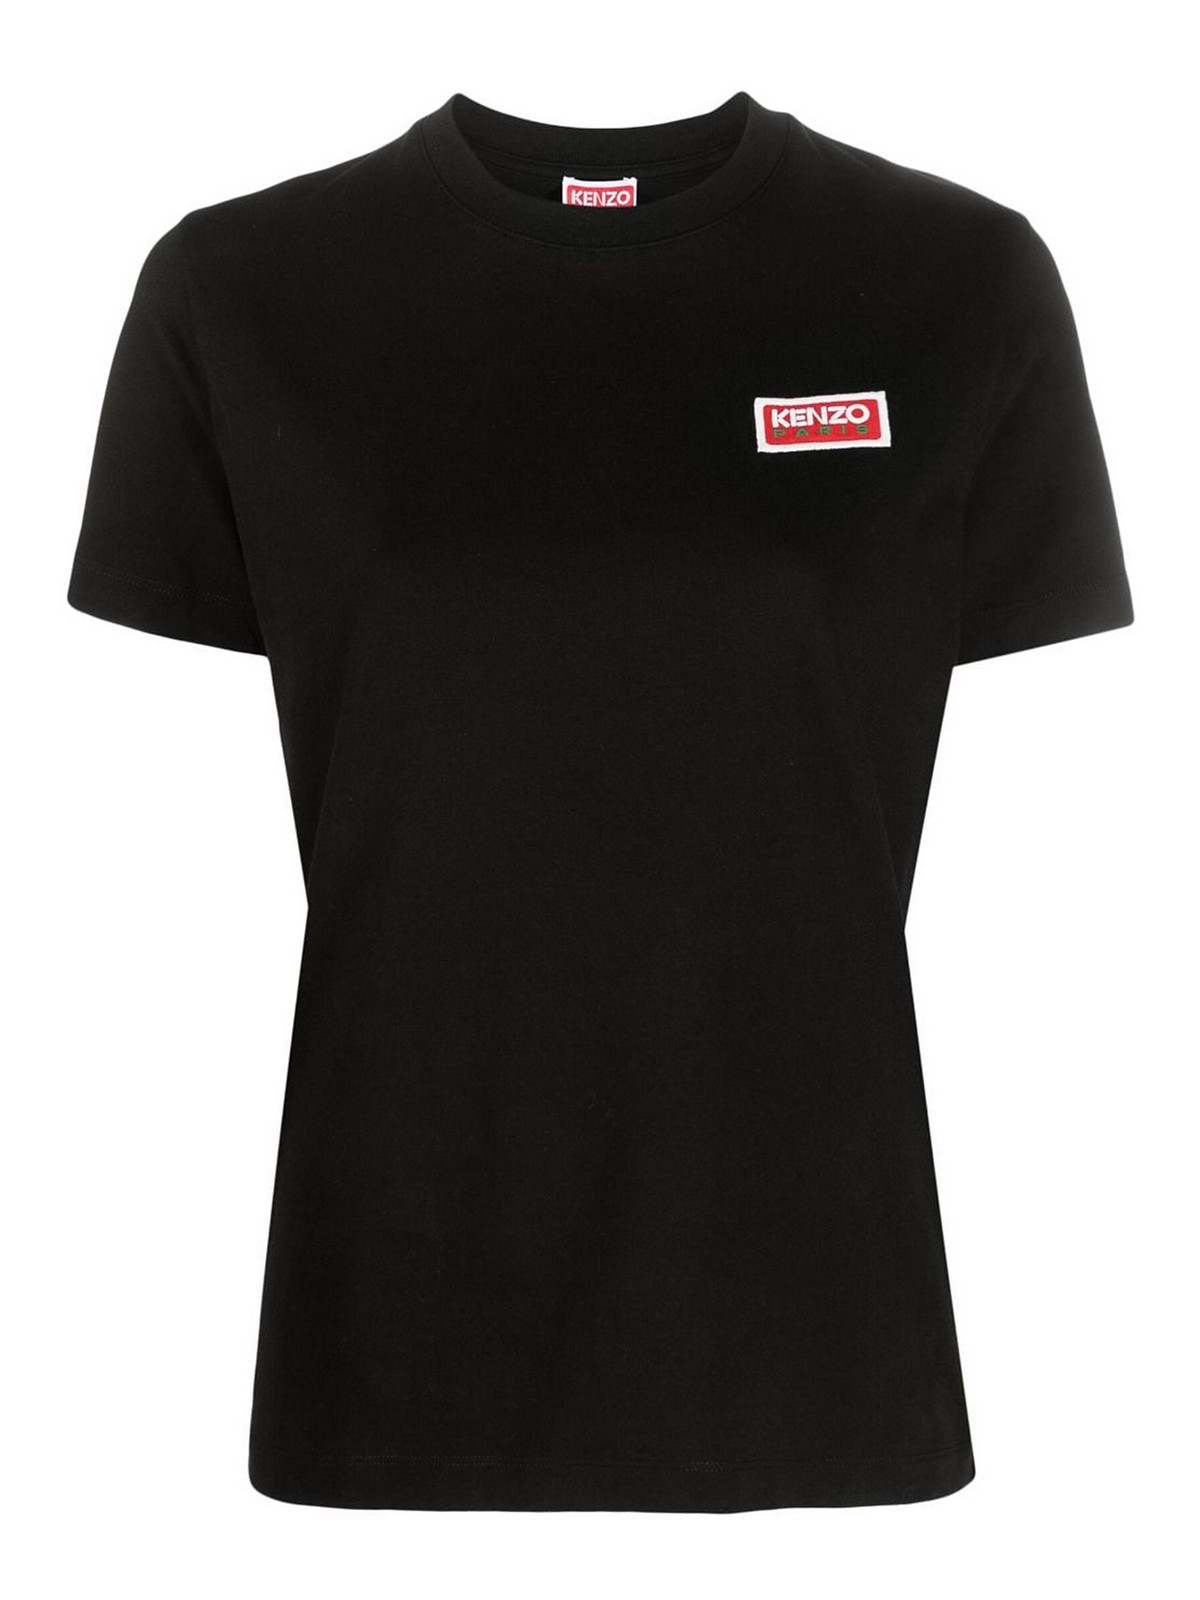 Kenzo Paris Cotton T-shirt In Black